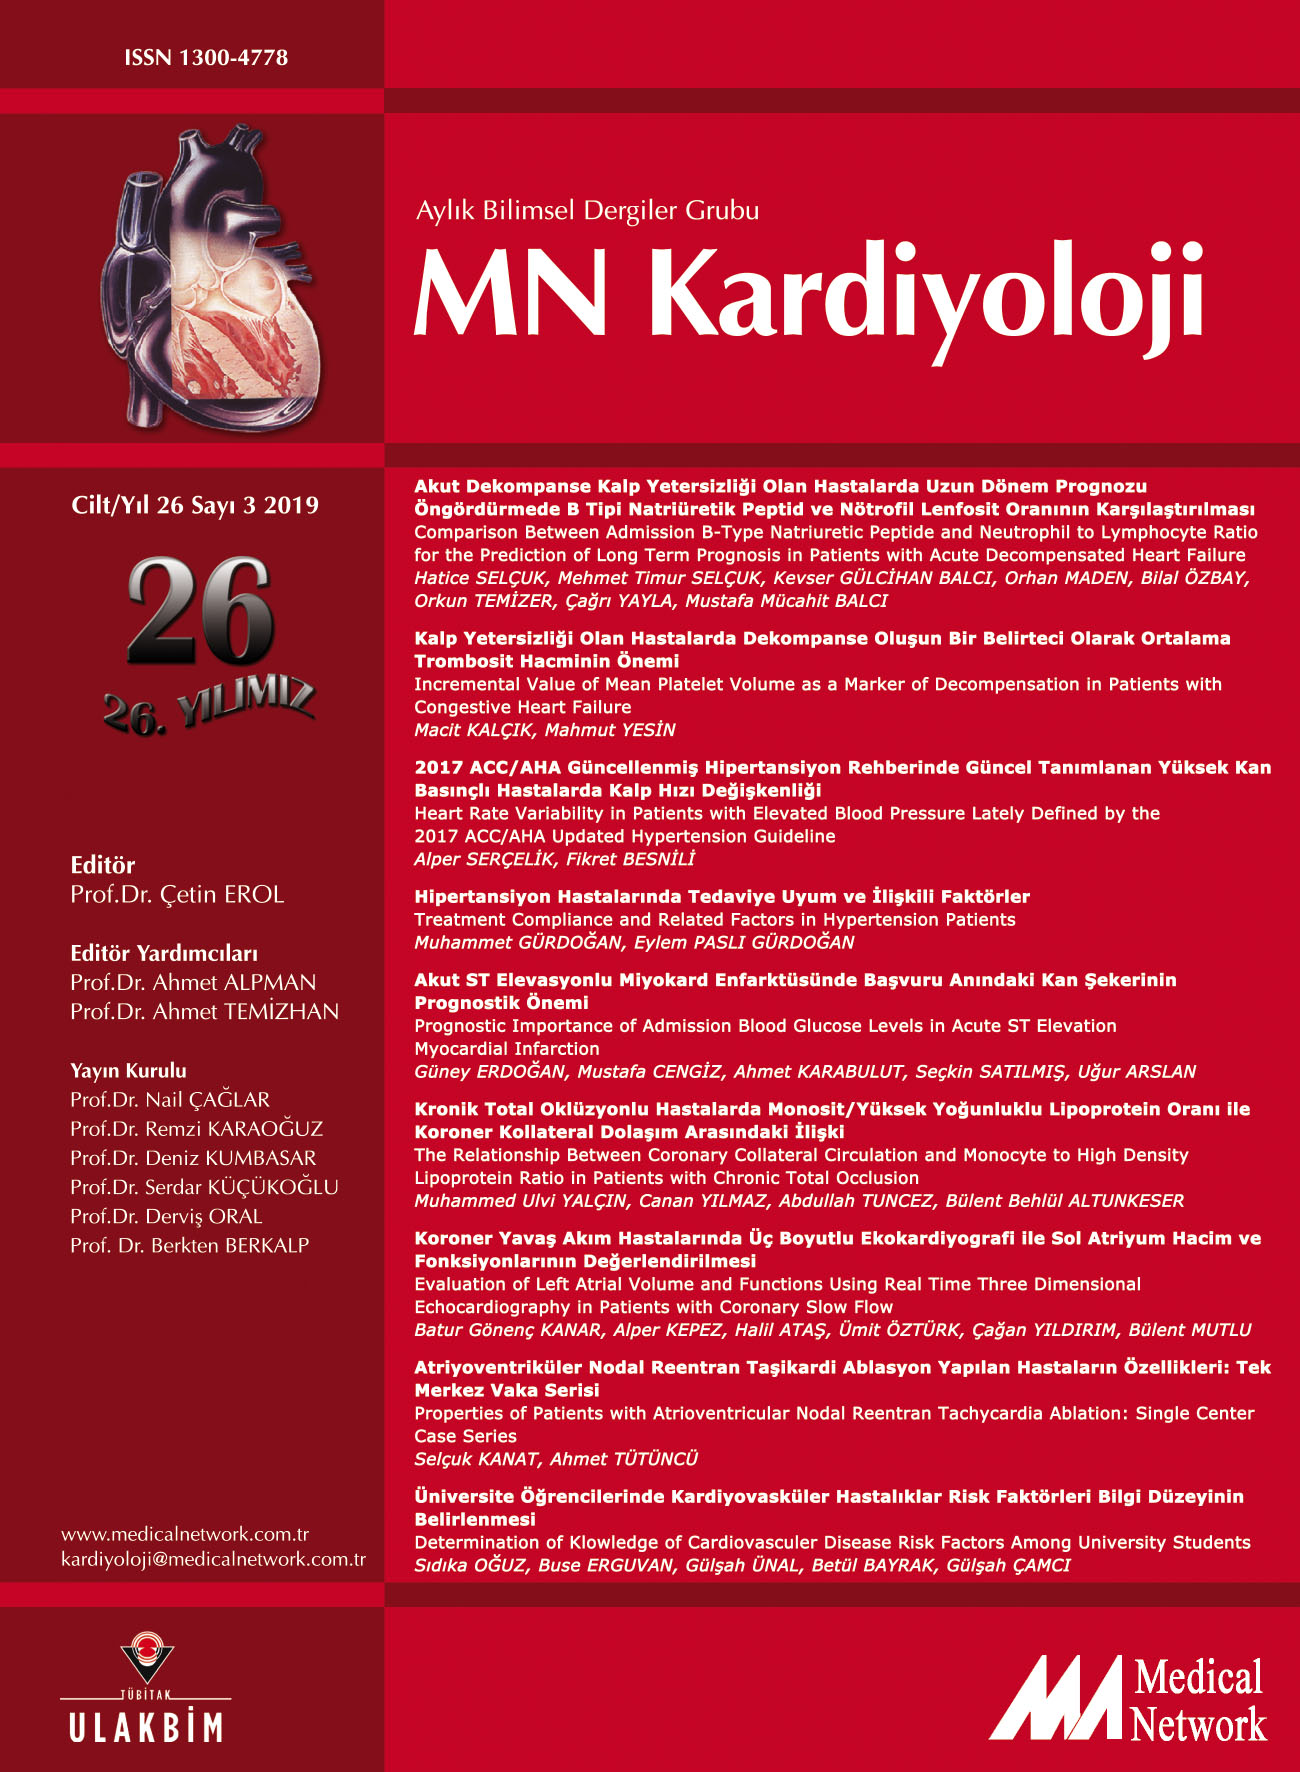 <p>MN Kardiyoloji Cilt: 26 Say: 3 2019 MN Cardiology Volume: 26 No: 3 2019</p>